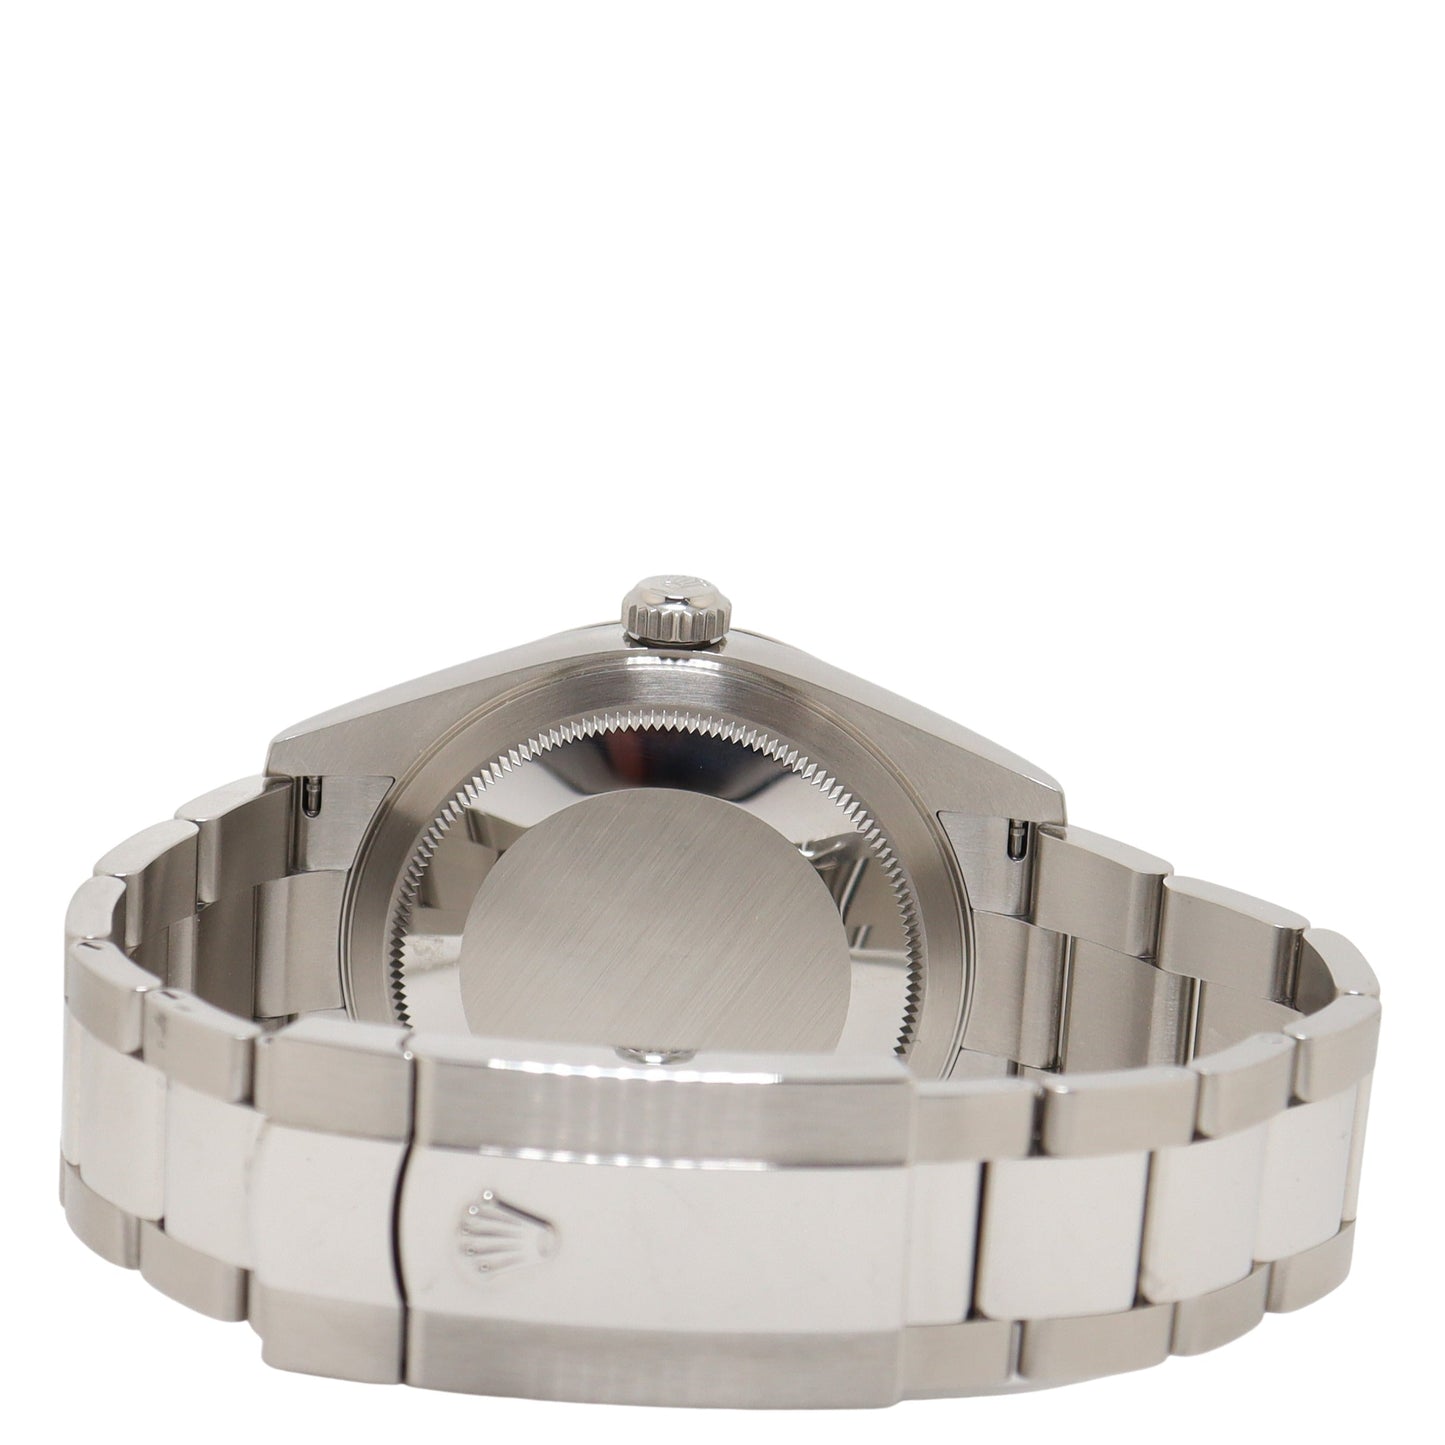 Rolex Sky-Dweller 42mm Stainless Steel White Stick Dial Watch Reference# 326934 - Happy Jewelers Fine Jewelry Lifetime Warranty